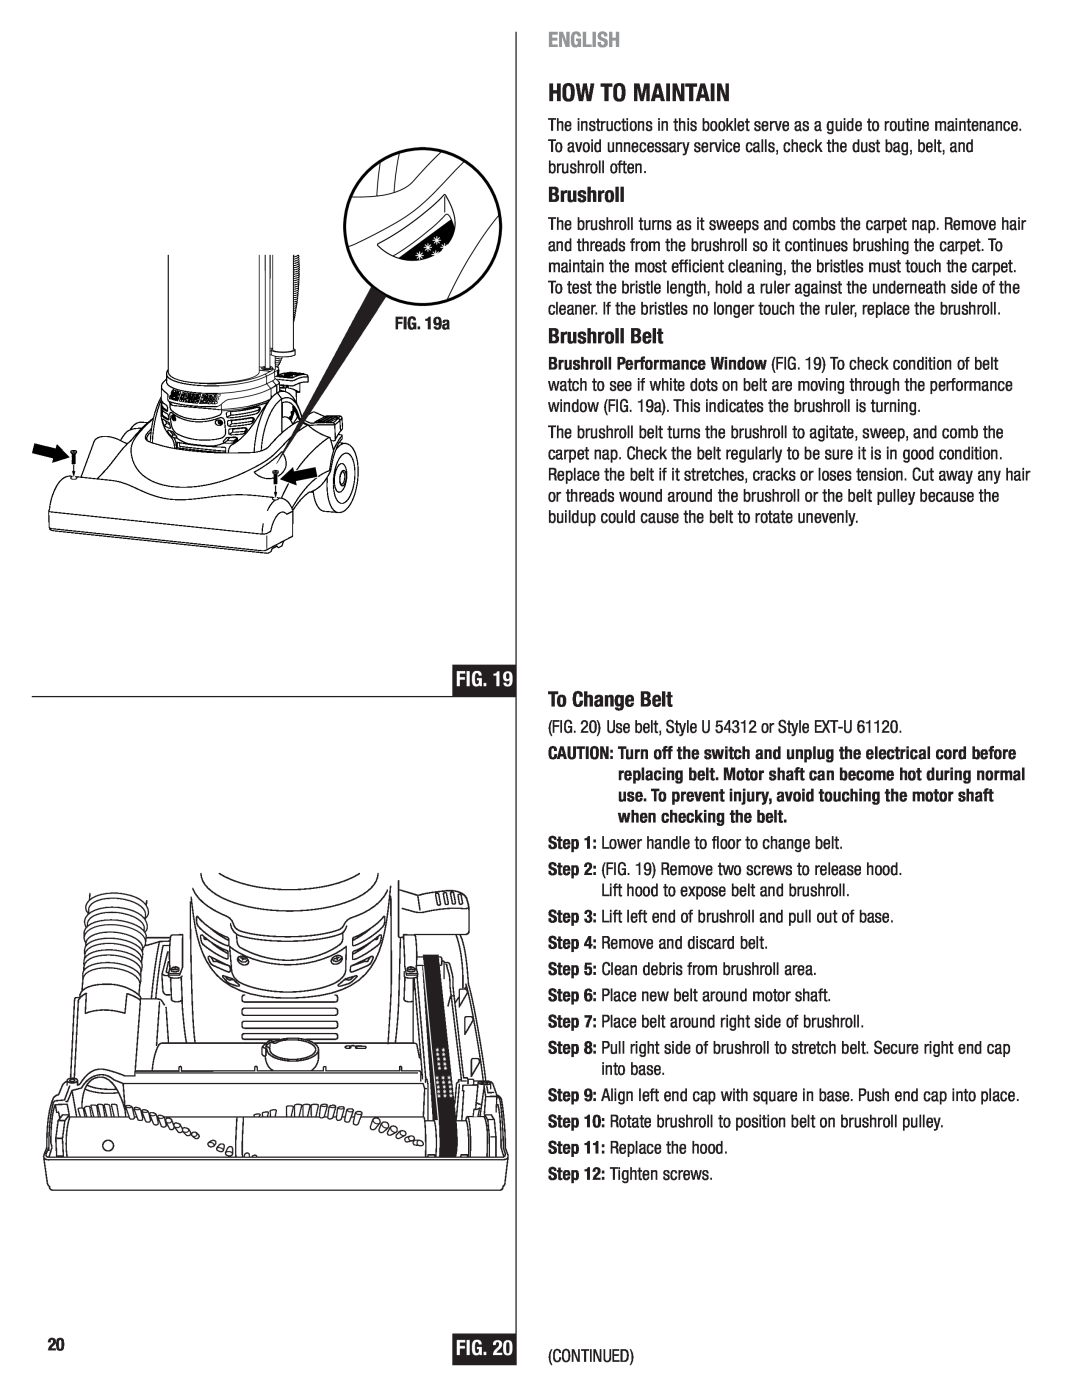 Eureka 4750 manual How To Maintain, Brushroll Belt, To Change Belt, English 